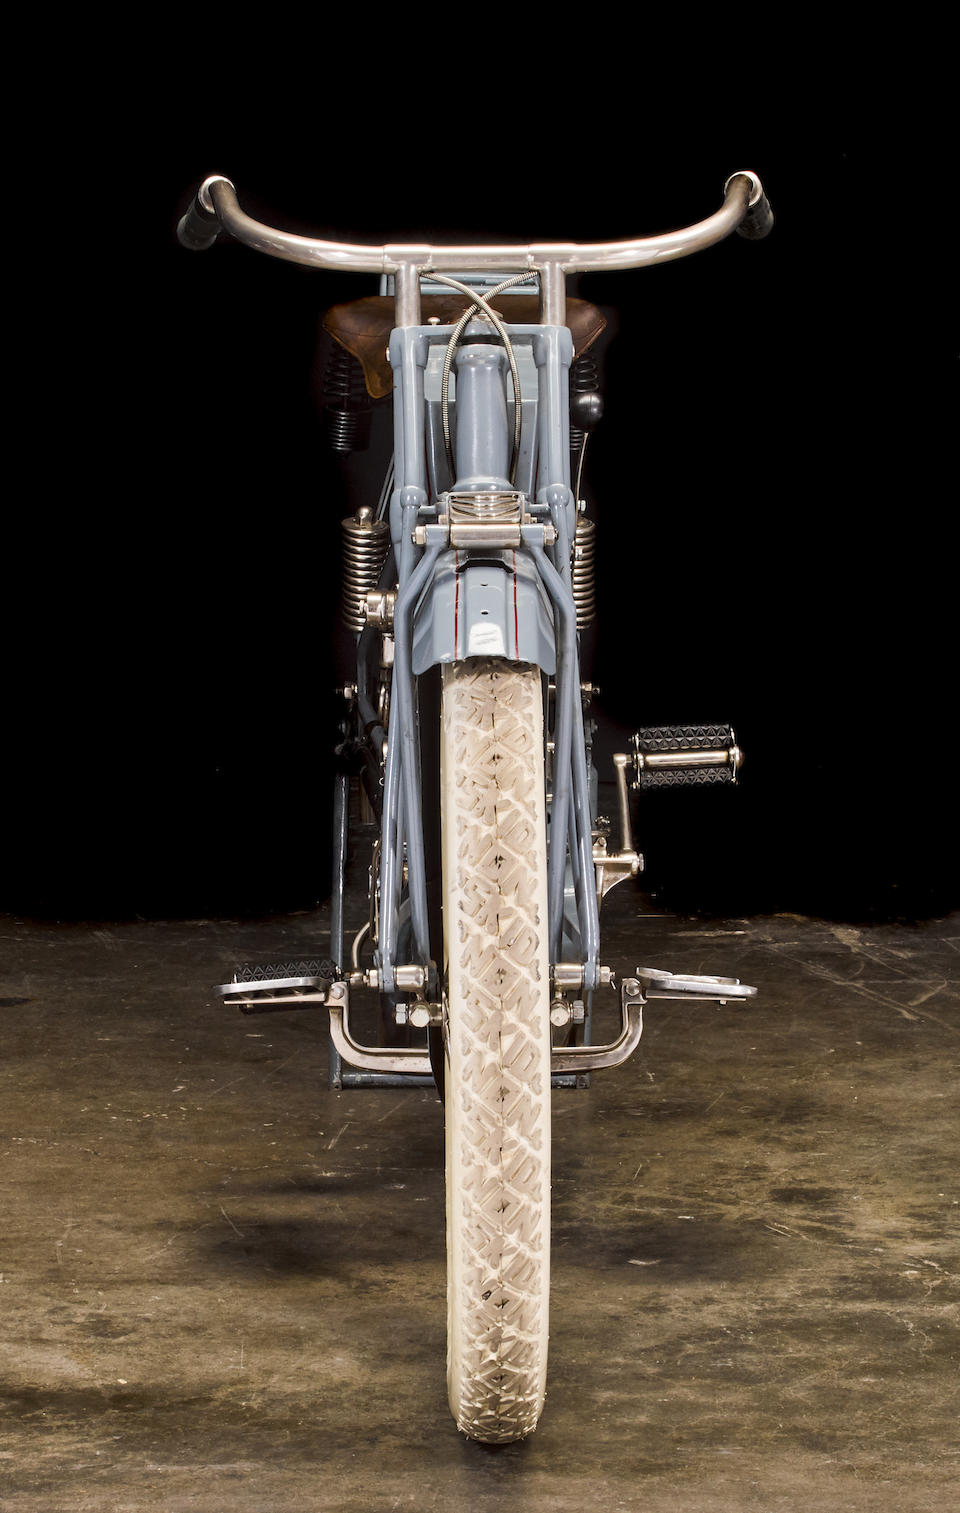 The ex-Steve Mcqueen, Otis Chandler,1914 Pope 61ci Model L Twin Engine no. 3L19A6